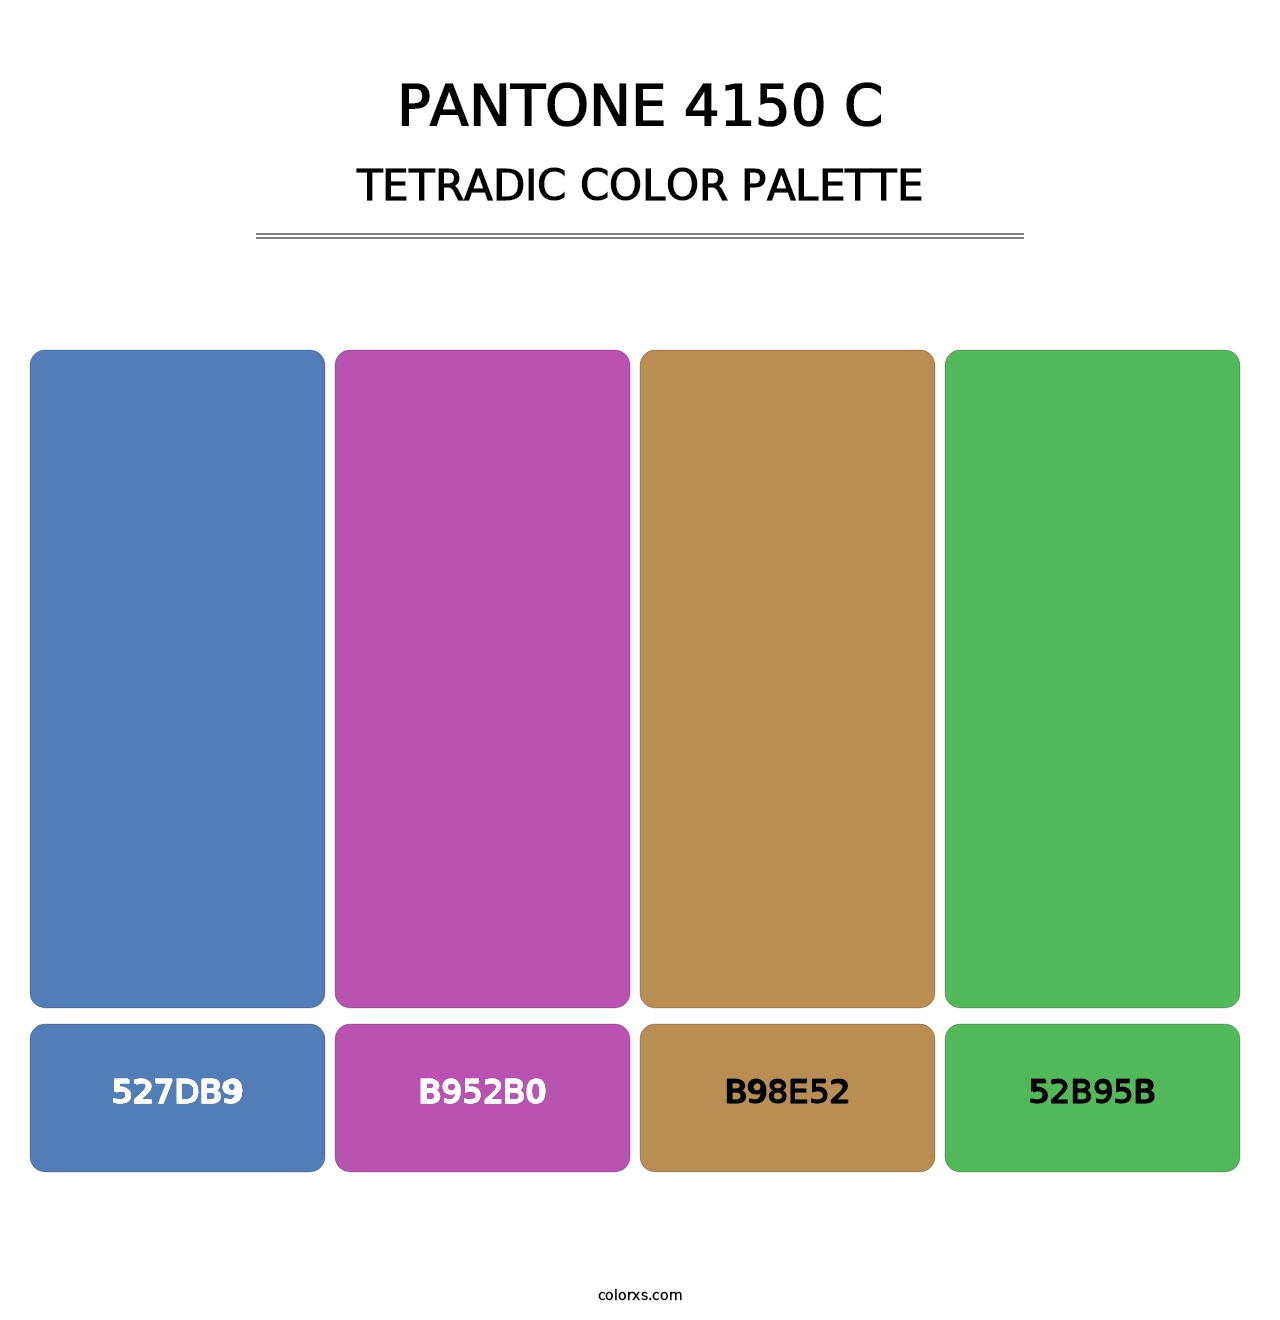 PANTONE 4150 C - Tetradic Color Palette